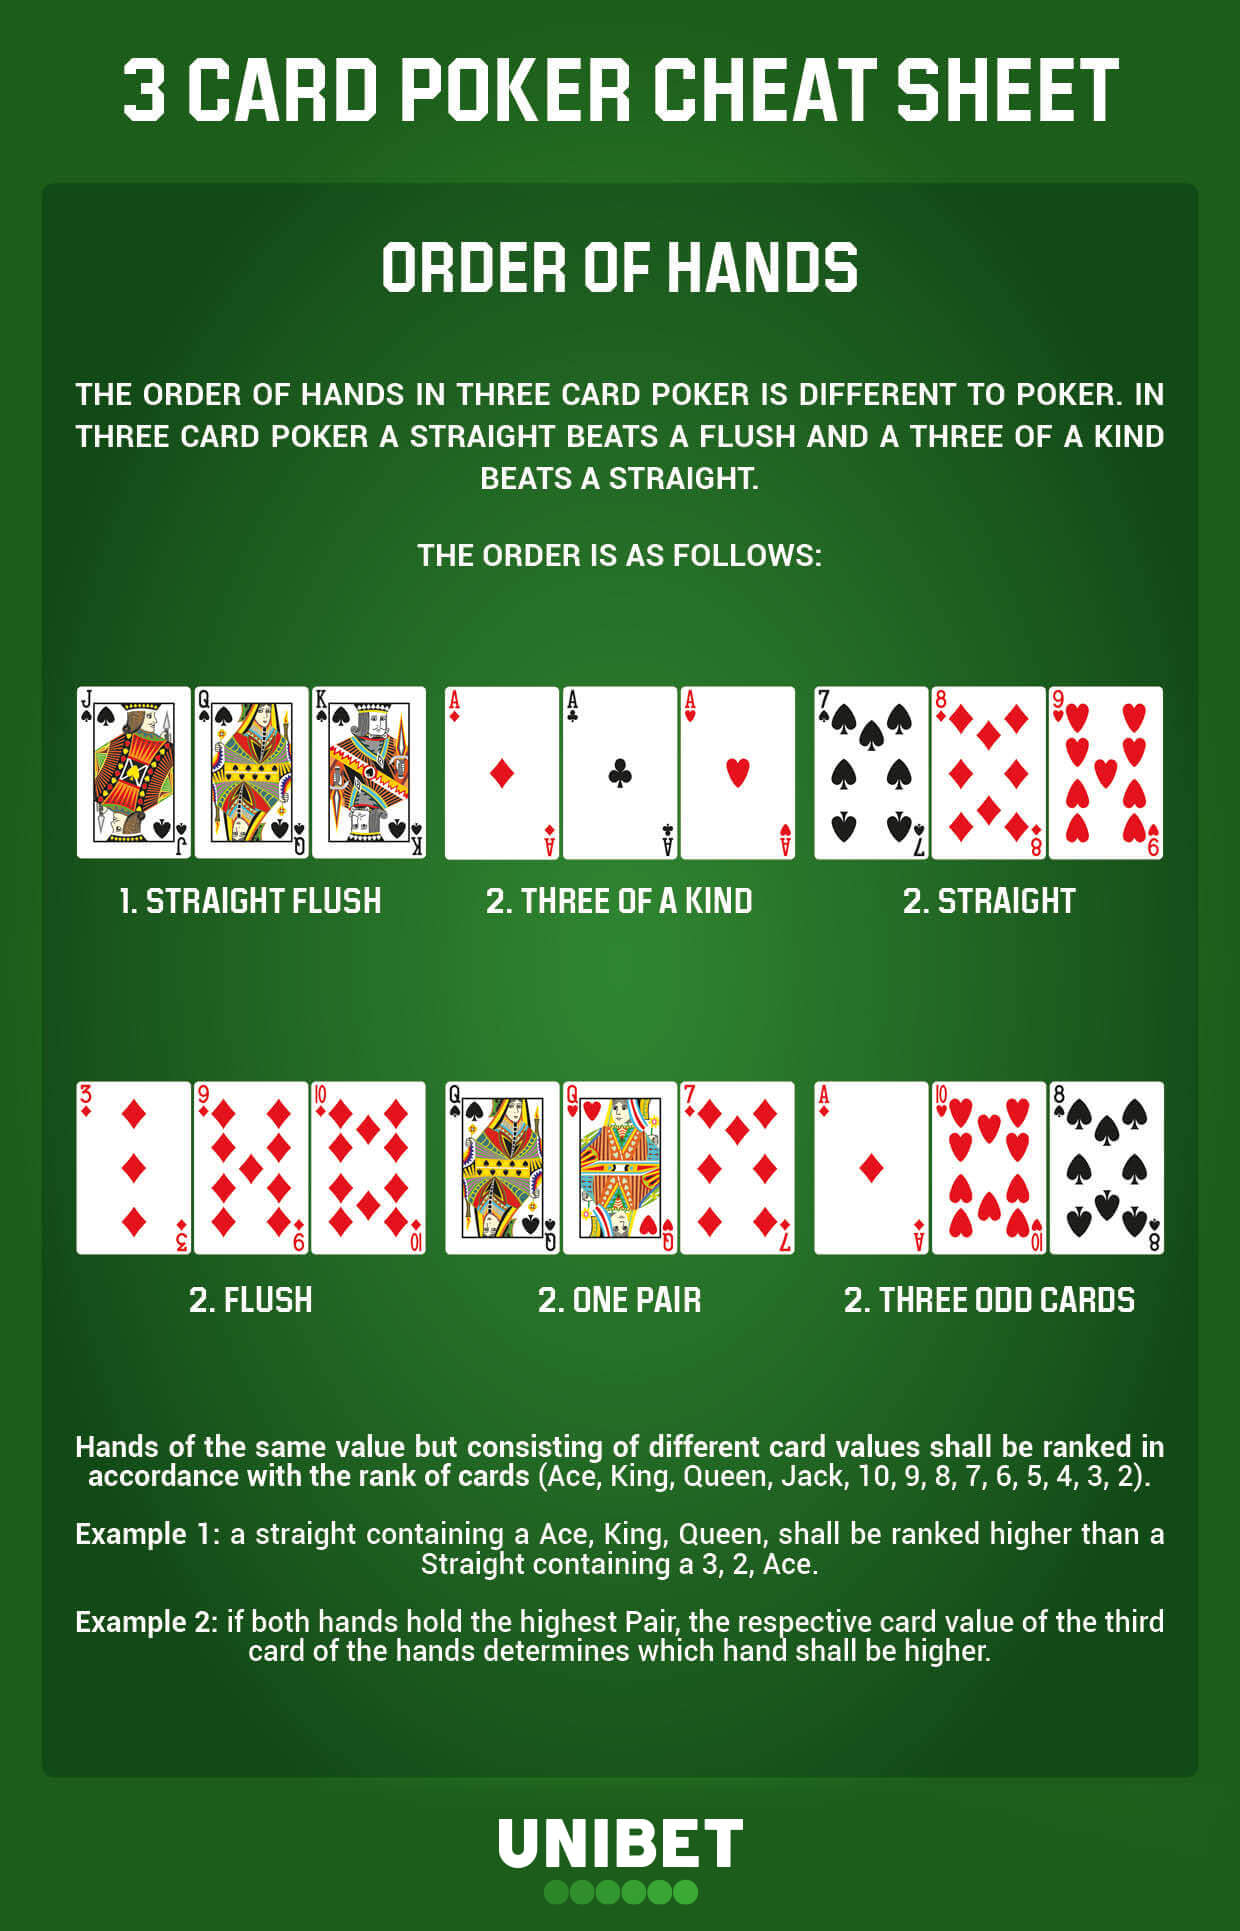 3 bet poker strategy